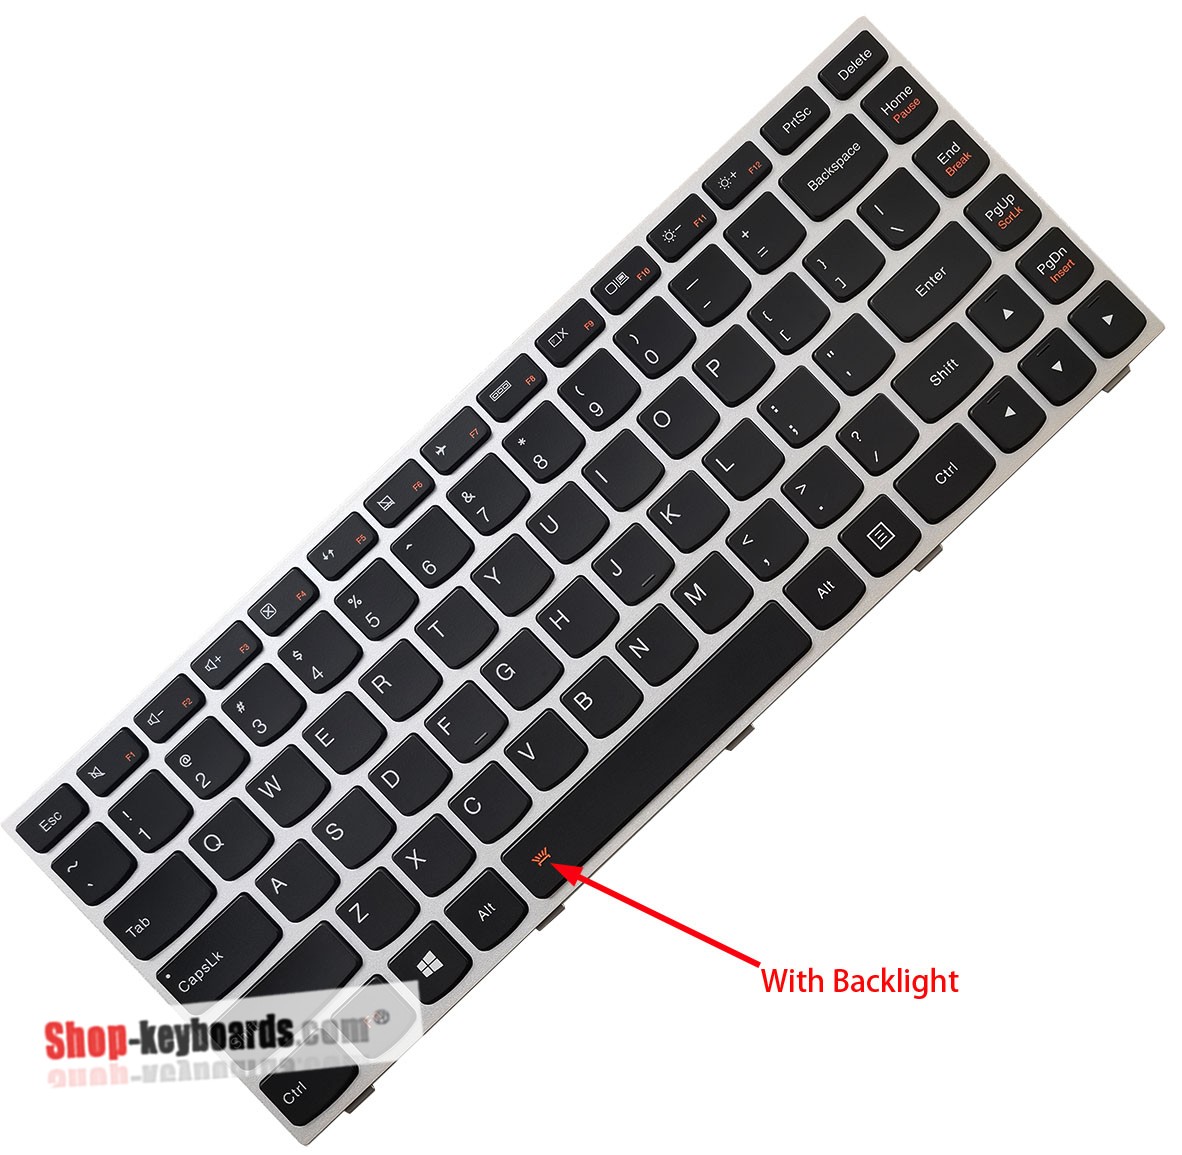 Lenovo FLEX 2-14D Keyboard replacement